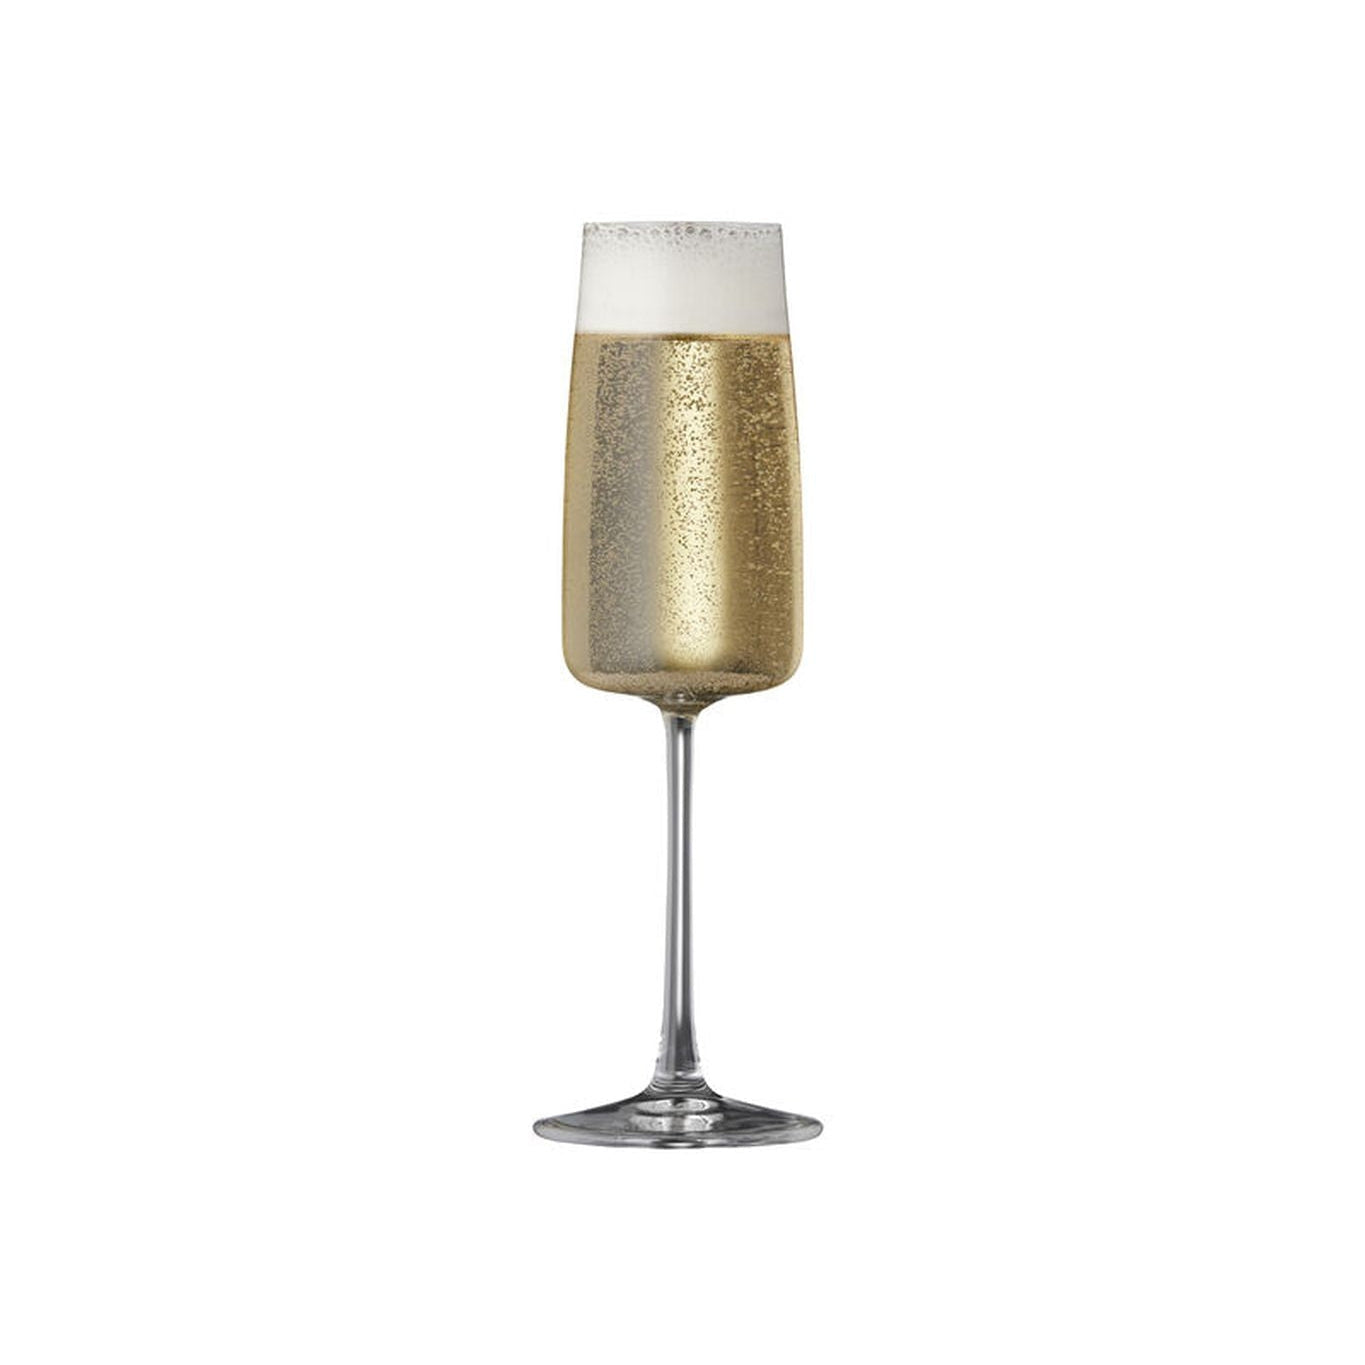 Lyngby Glas Zero Krystal Champagne Glass 30 CL, 4 pc's.